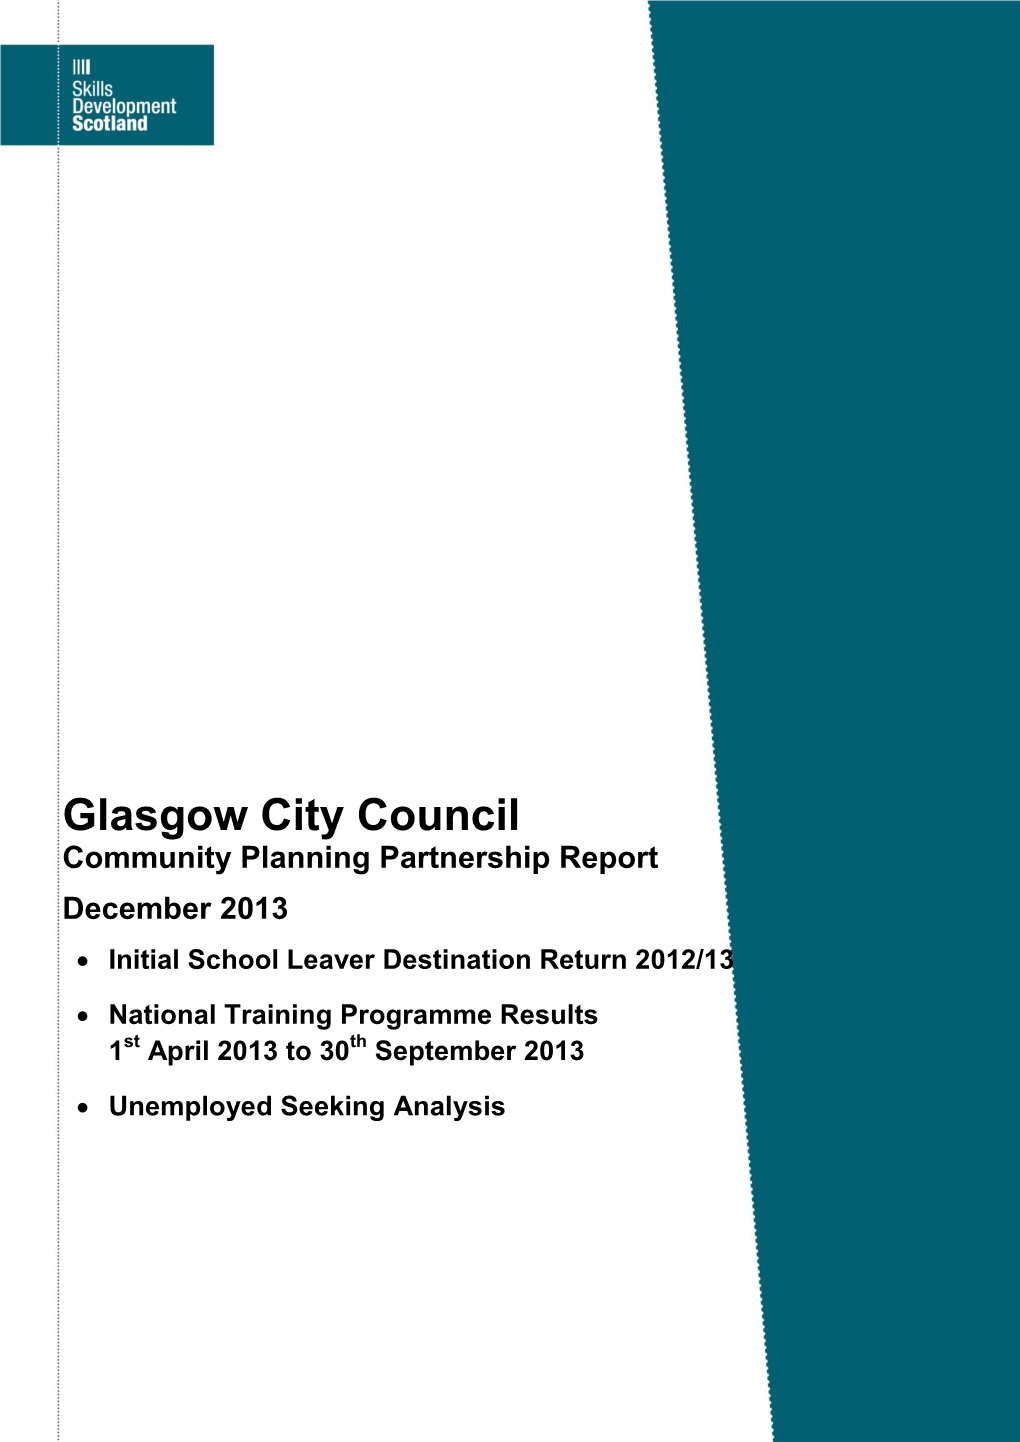 Glasgow City Council Community Planning Partnership Report December 2013